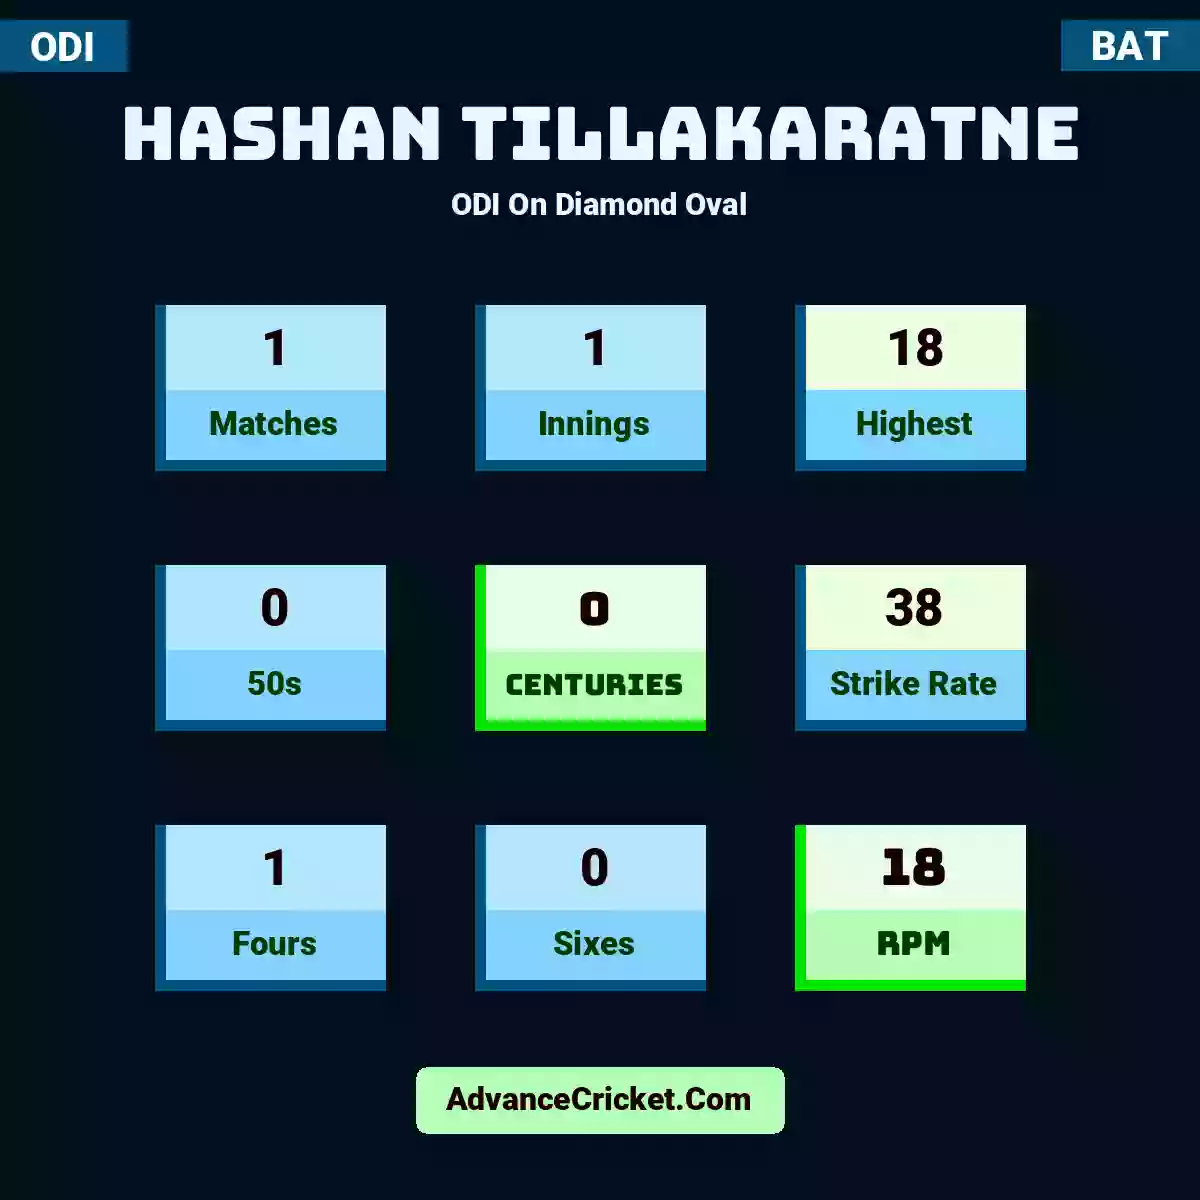 Hashan Tillakaratne ODI  On Diamond Oval, Hashan Tillakaratne played 1 matches, scored 18 runs as highest, 0 half-centuries, and 0 centuries, with a strike rate of 38. H.Tillakaratne hit 1 fours and 0 sixes, with an RPM of 18.